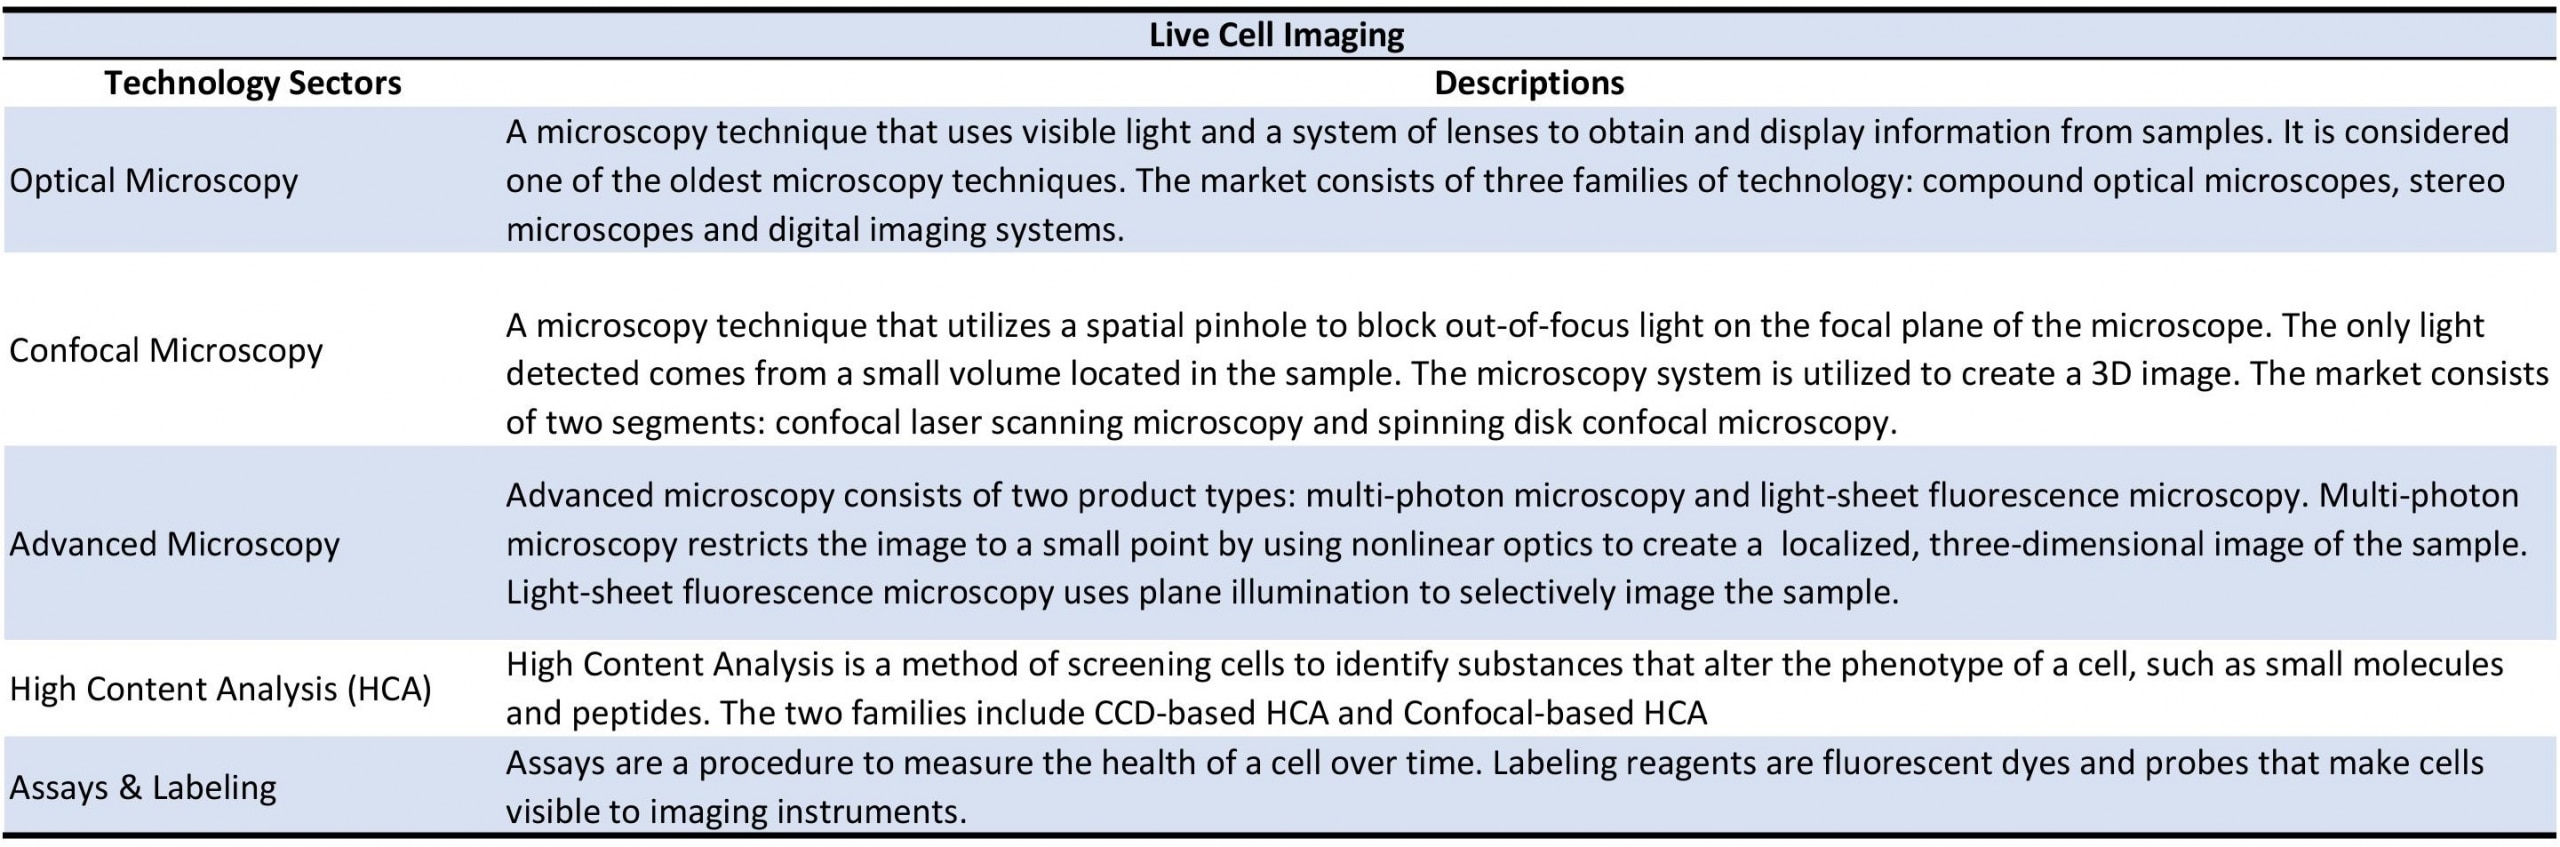 live cell imaging market